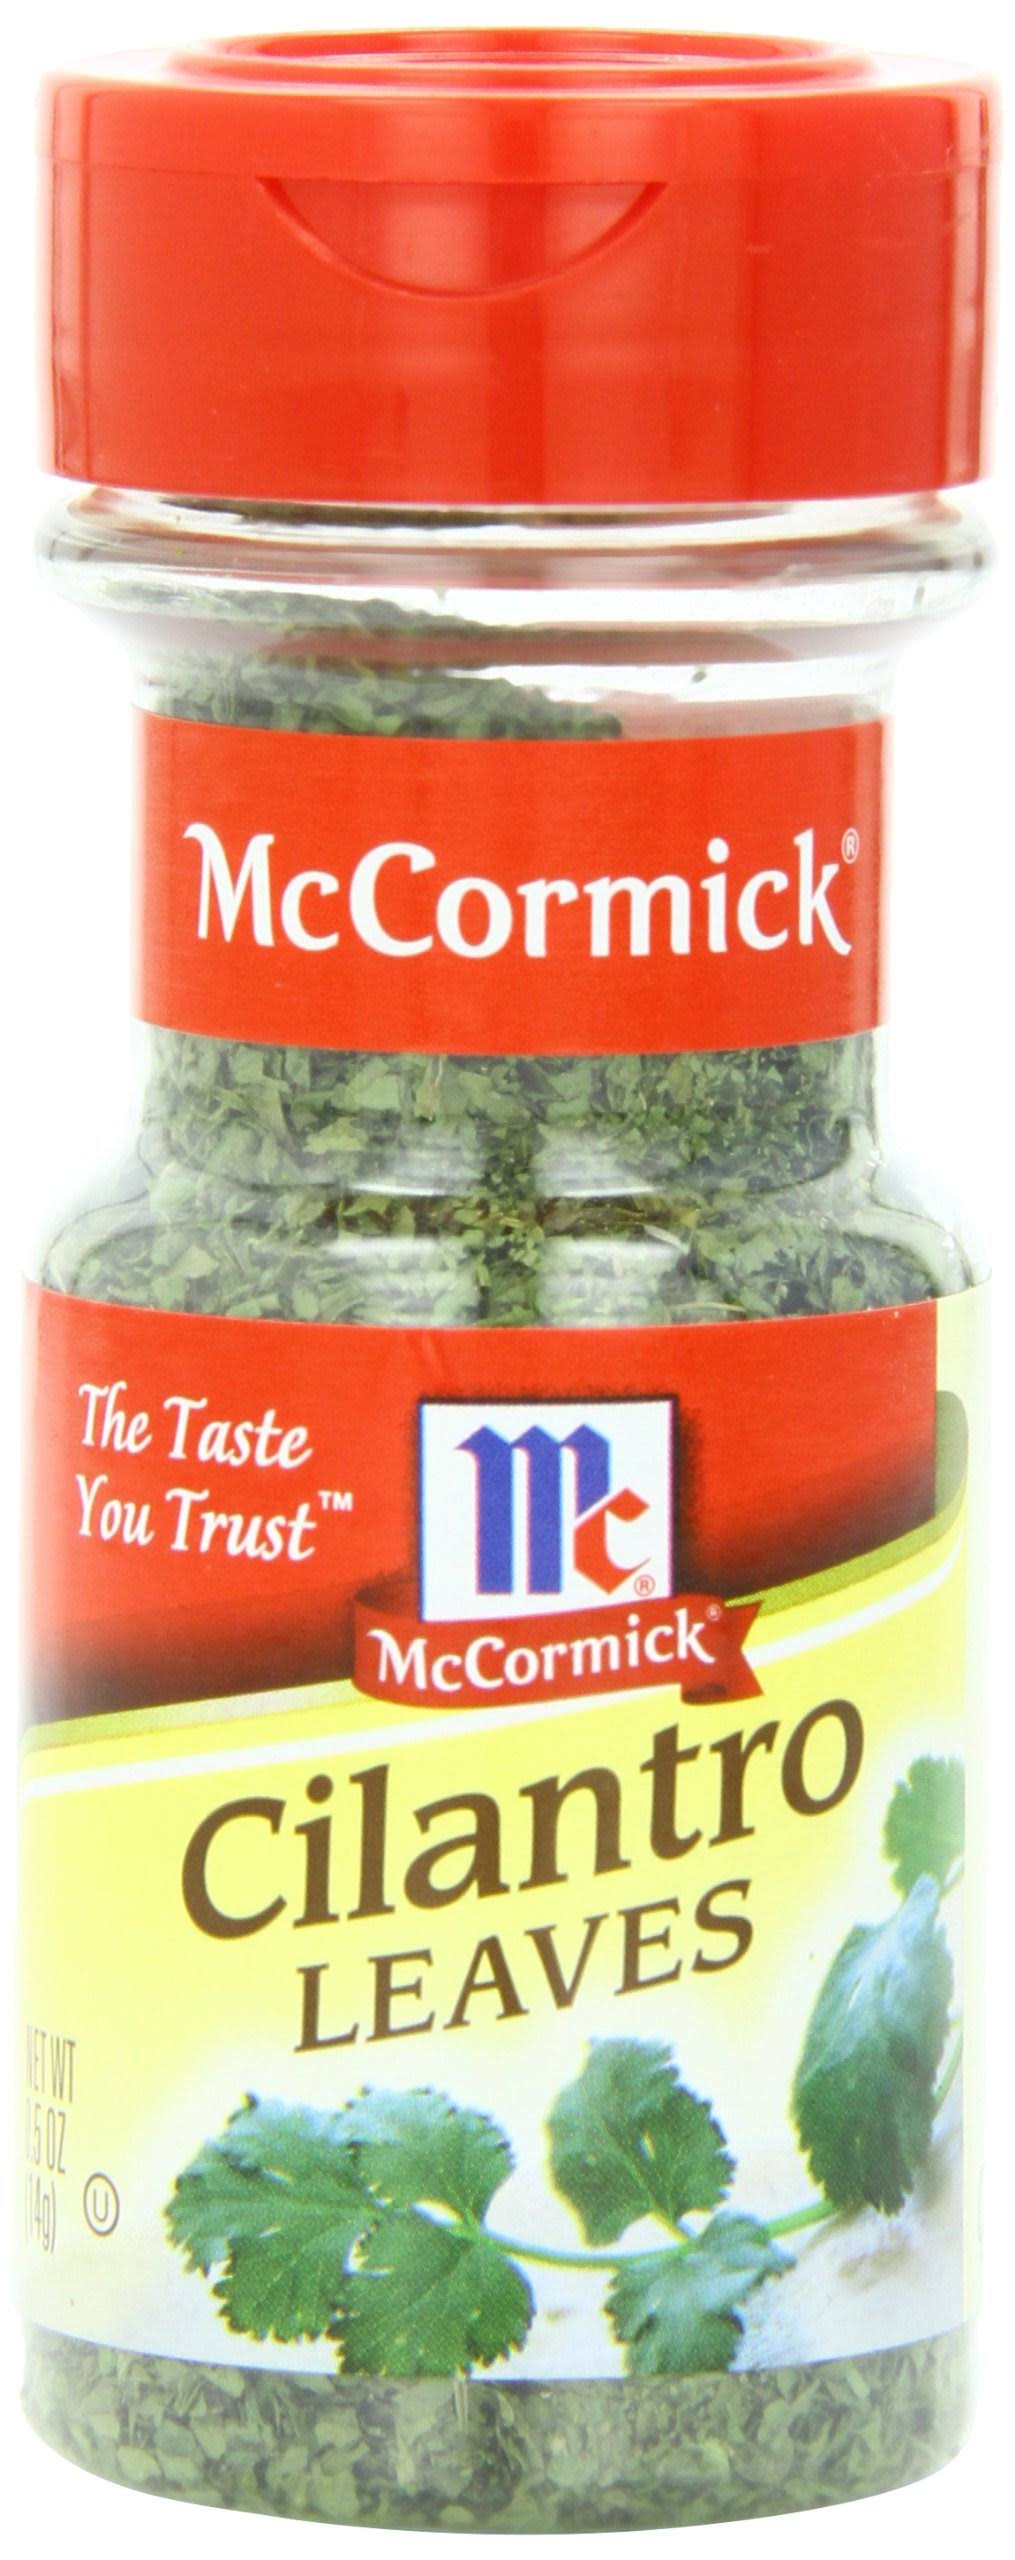 McCormick Cilantro Leaves - 0.5oz